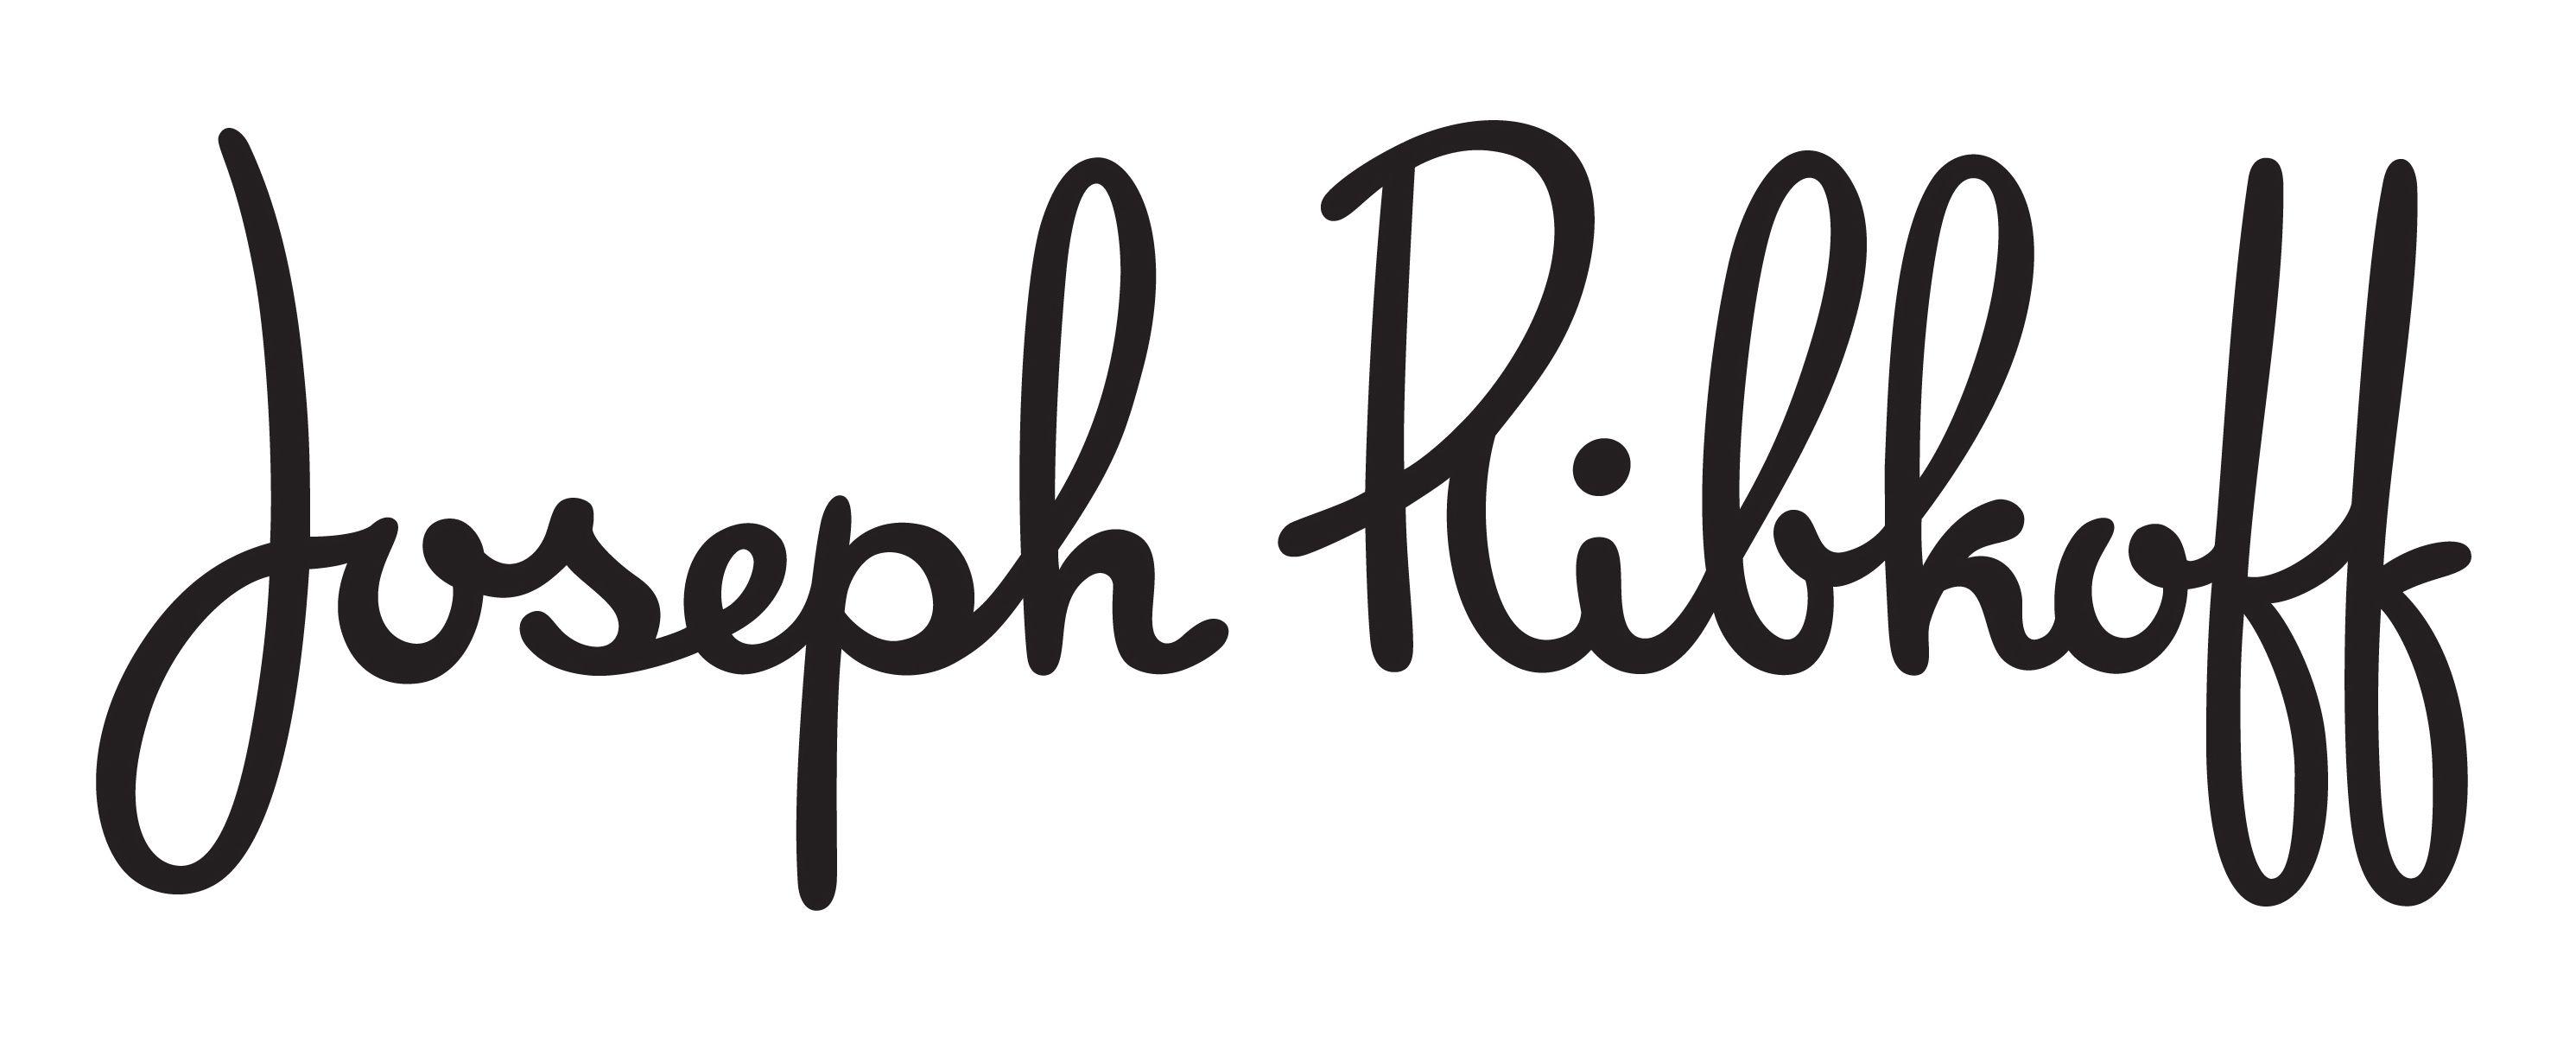 Joseph Logo - Joseph Ribkoff Logo (new)